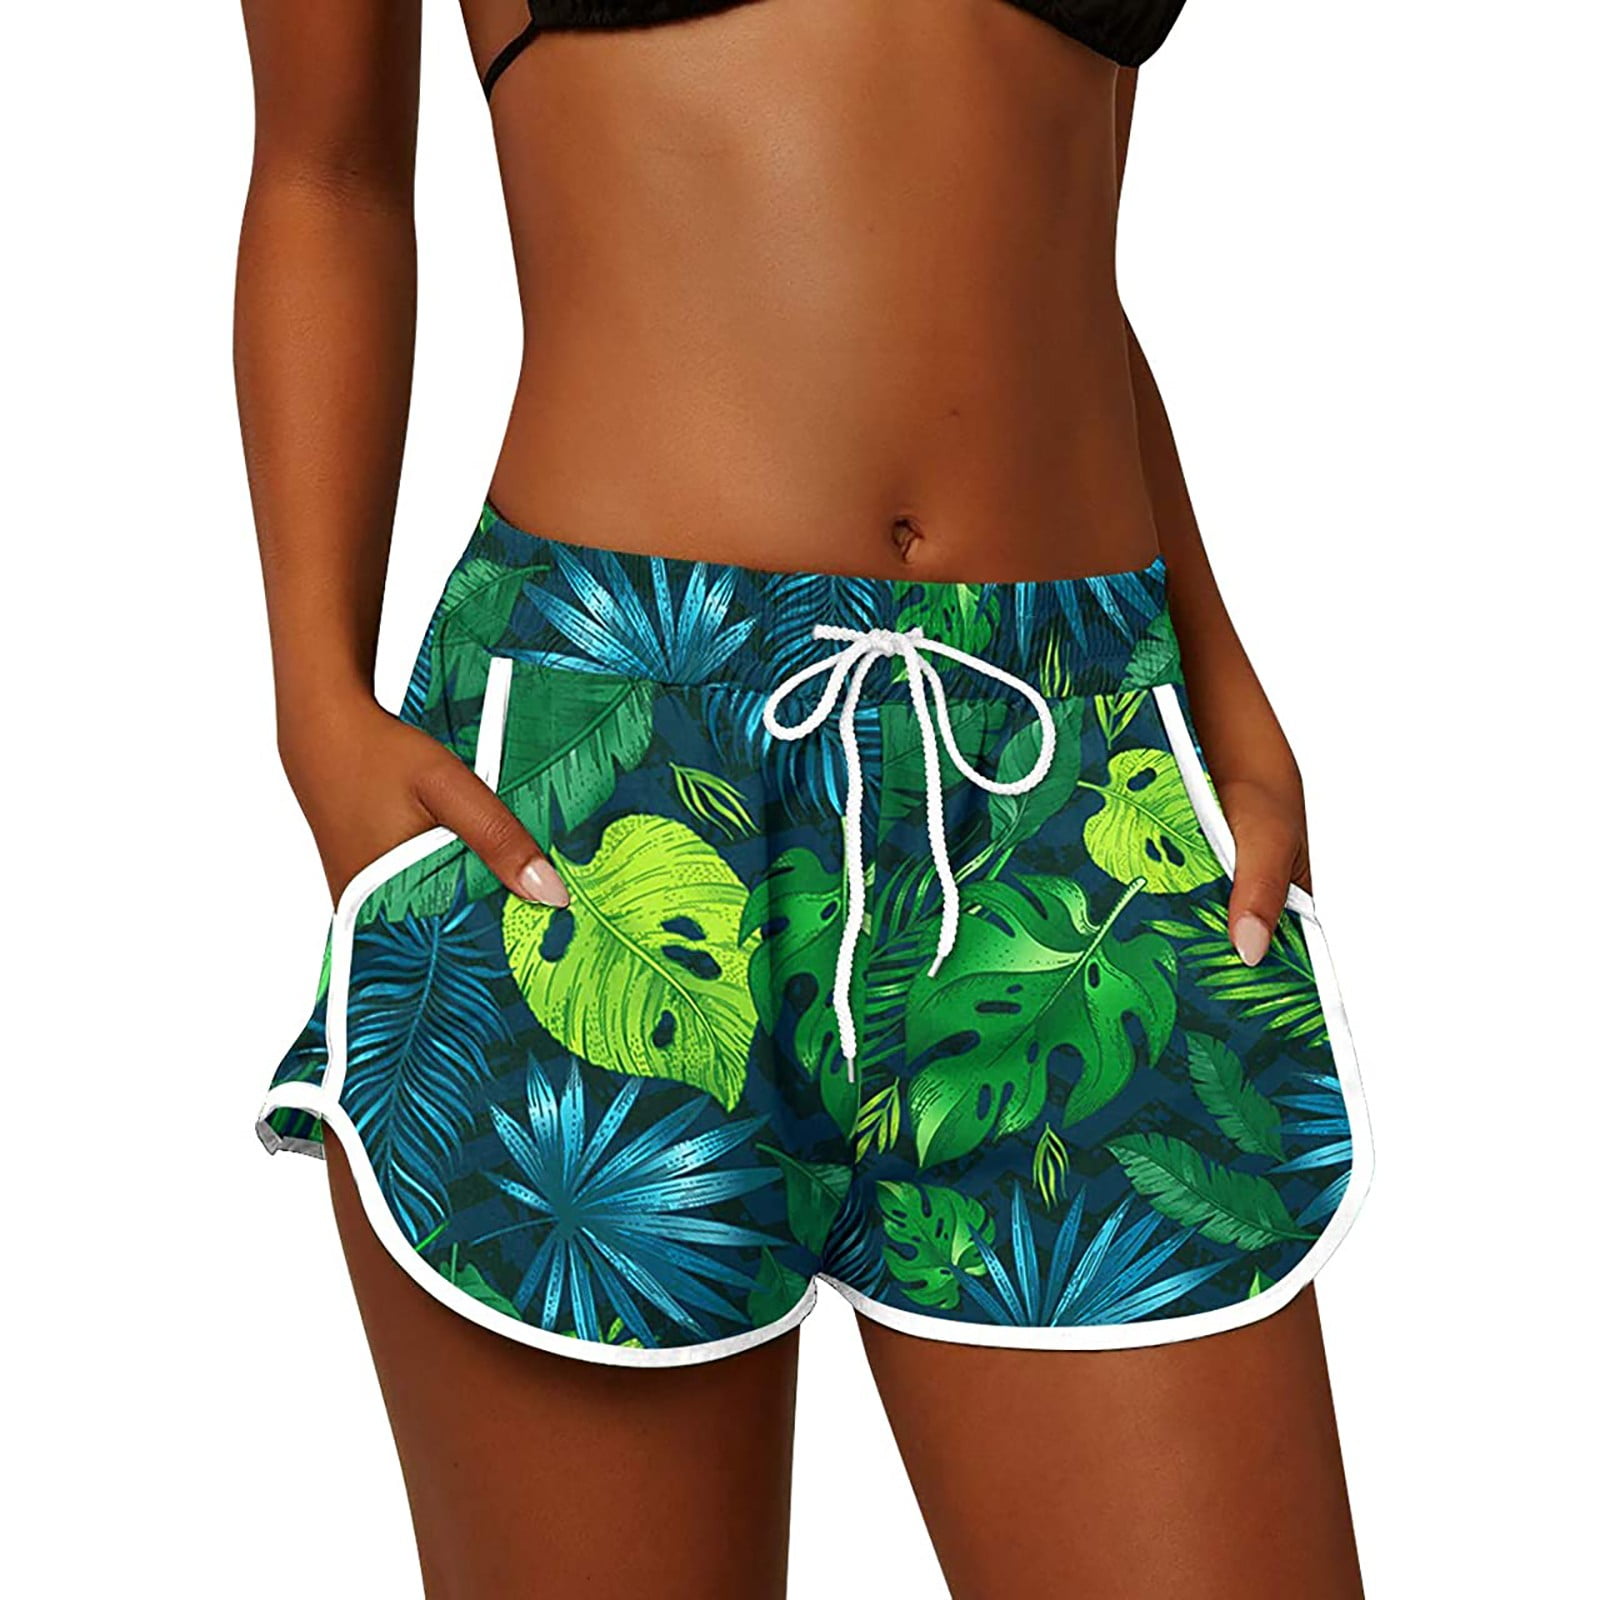 WIHVE Mens Beach Swim Trunks Black Background with Poppy Flowers Boxer Swimsuit Underwear Board Shorts with Pocket 